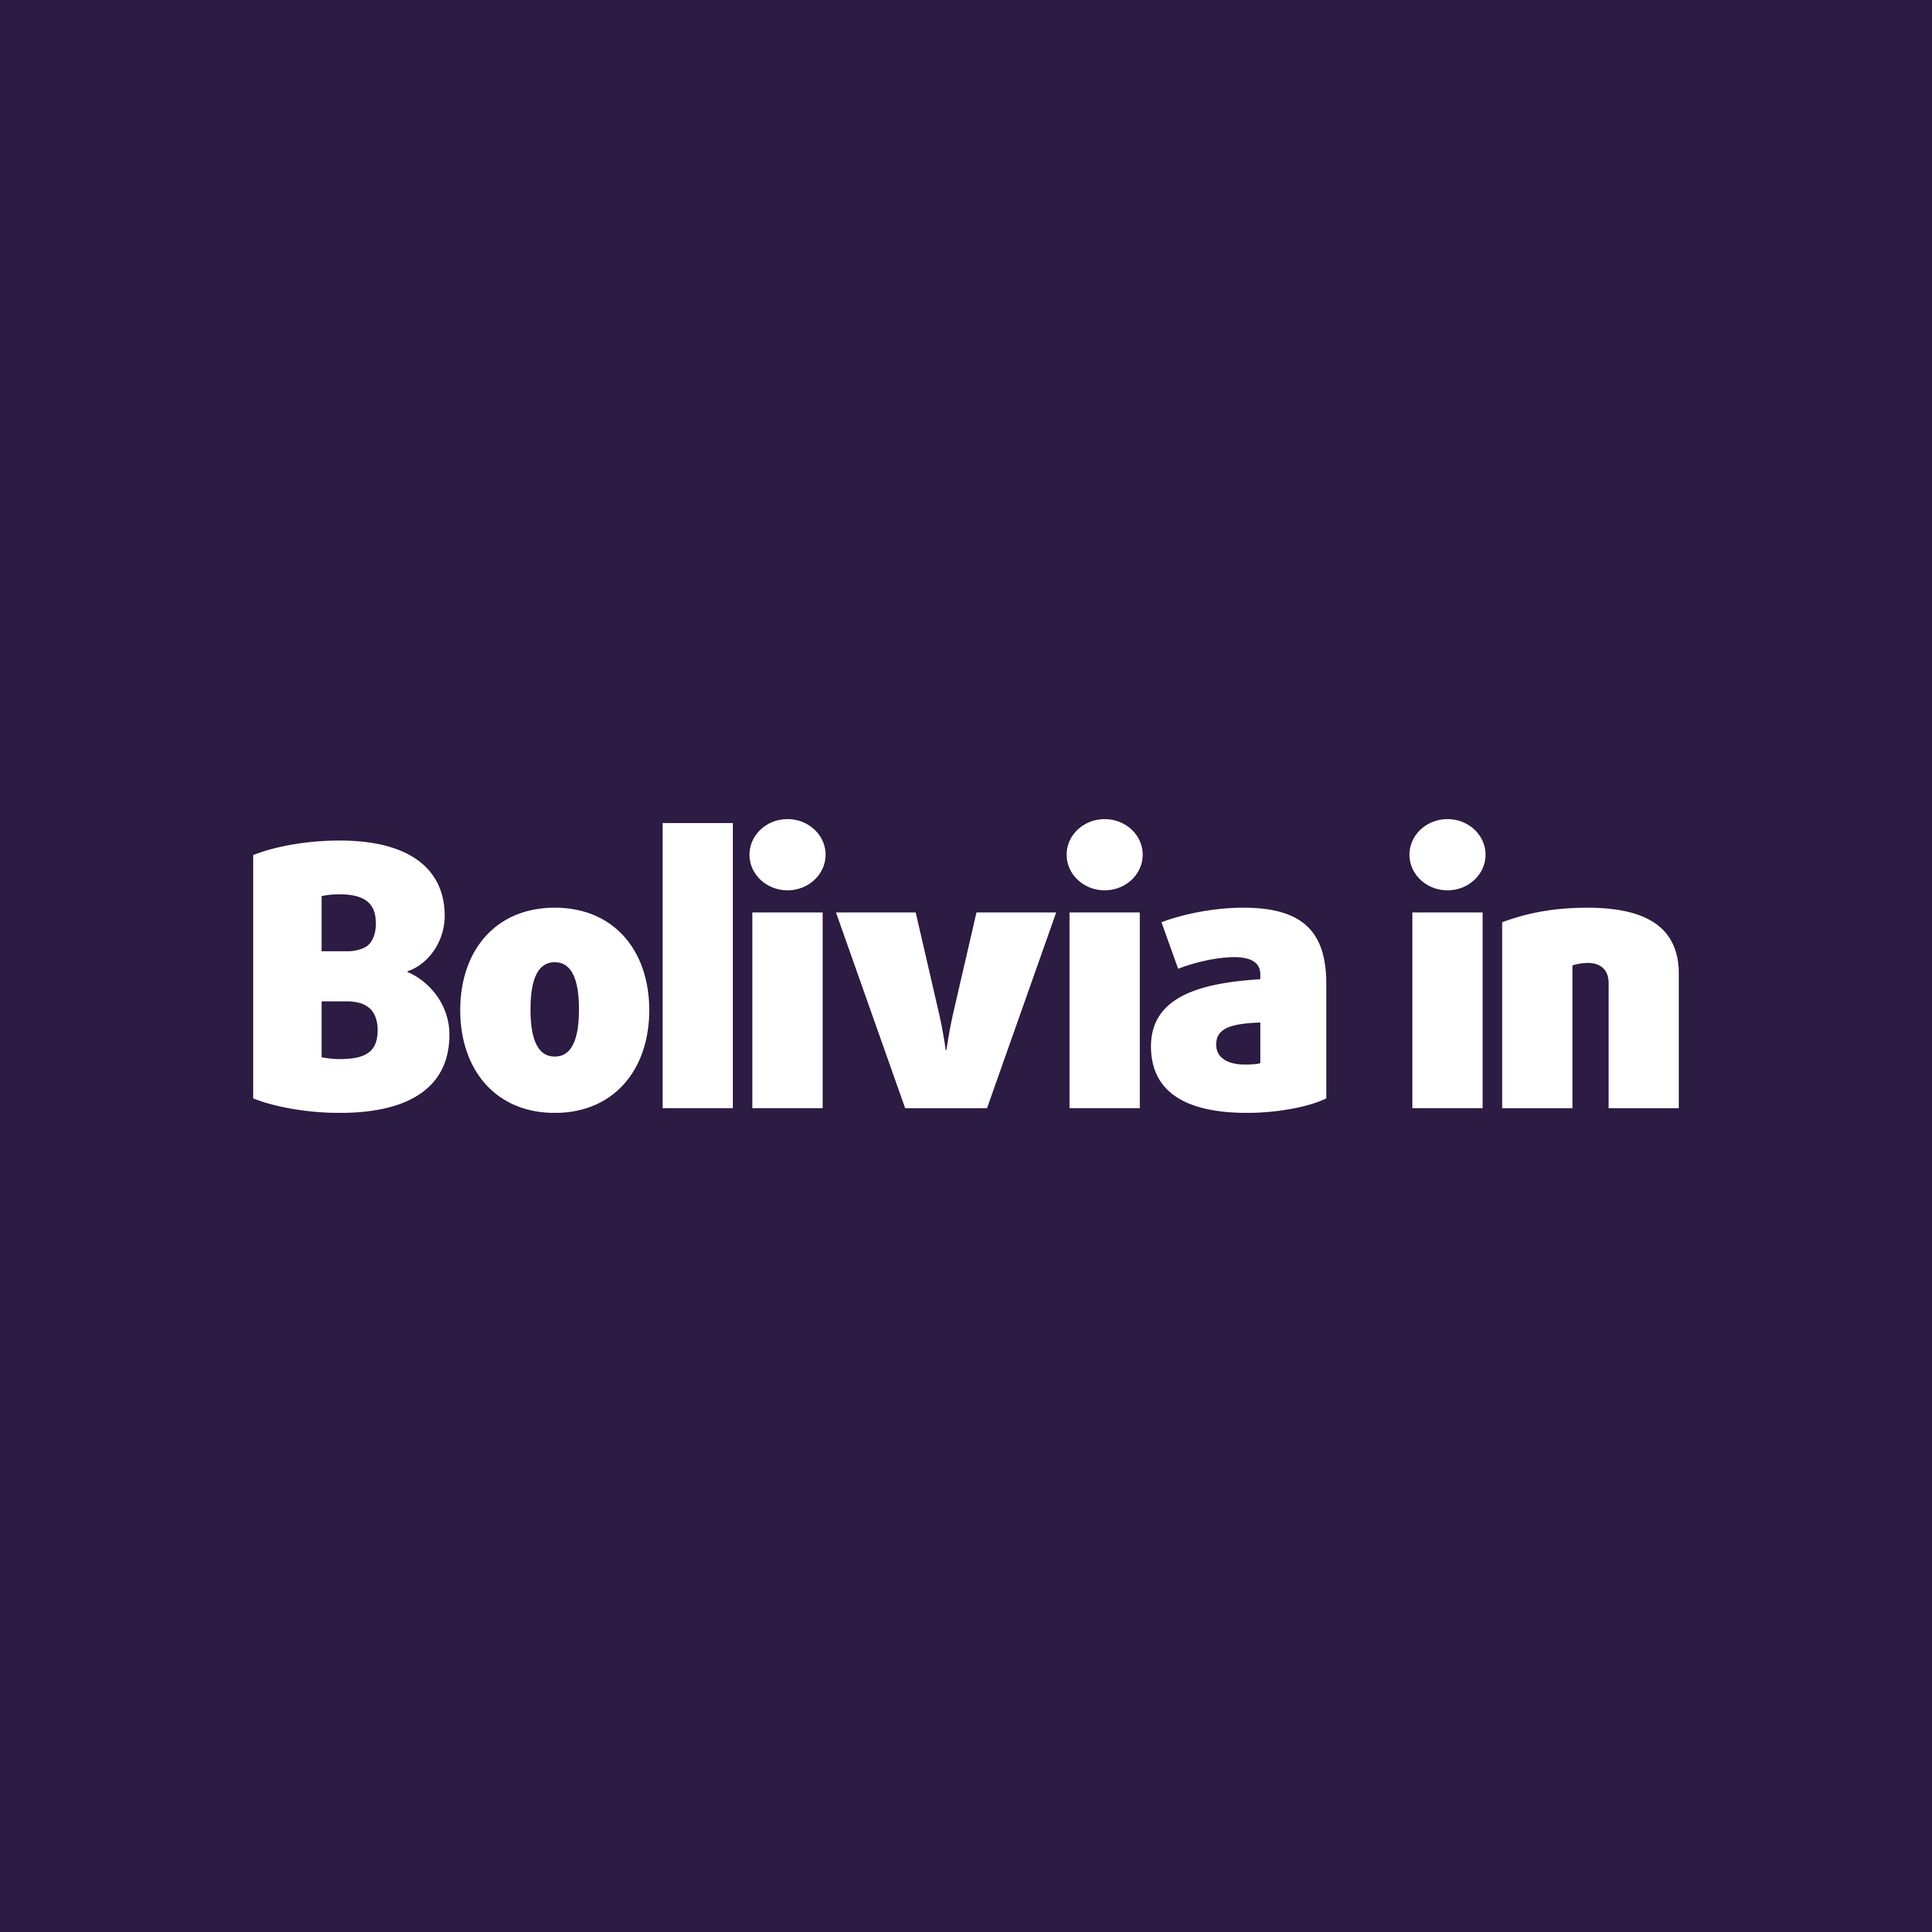 BOLIVIA IN